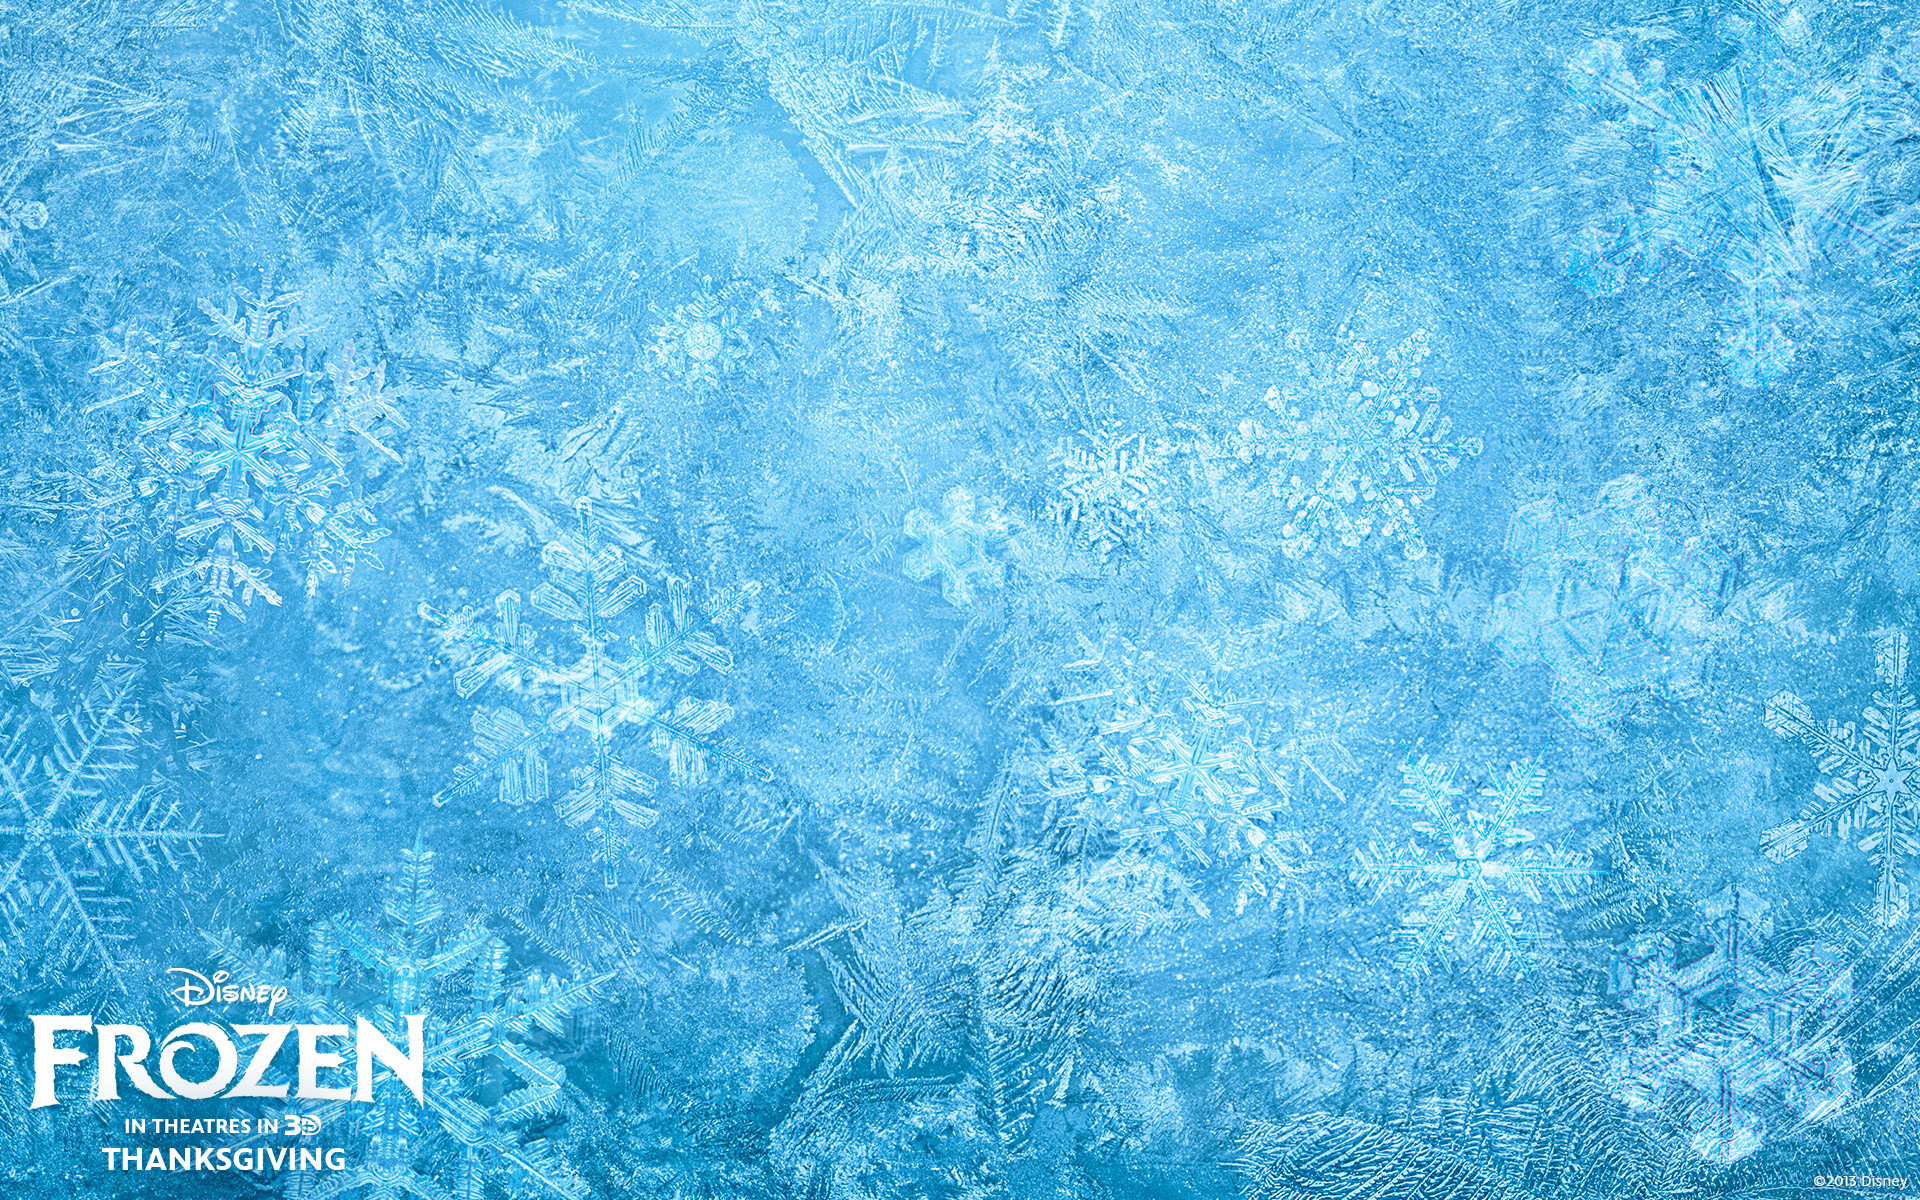 1920x1200 Frozen images Frozen Wallpaper HD wallpaper and background photos